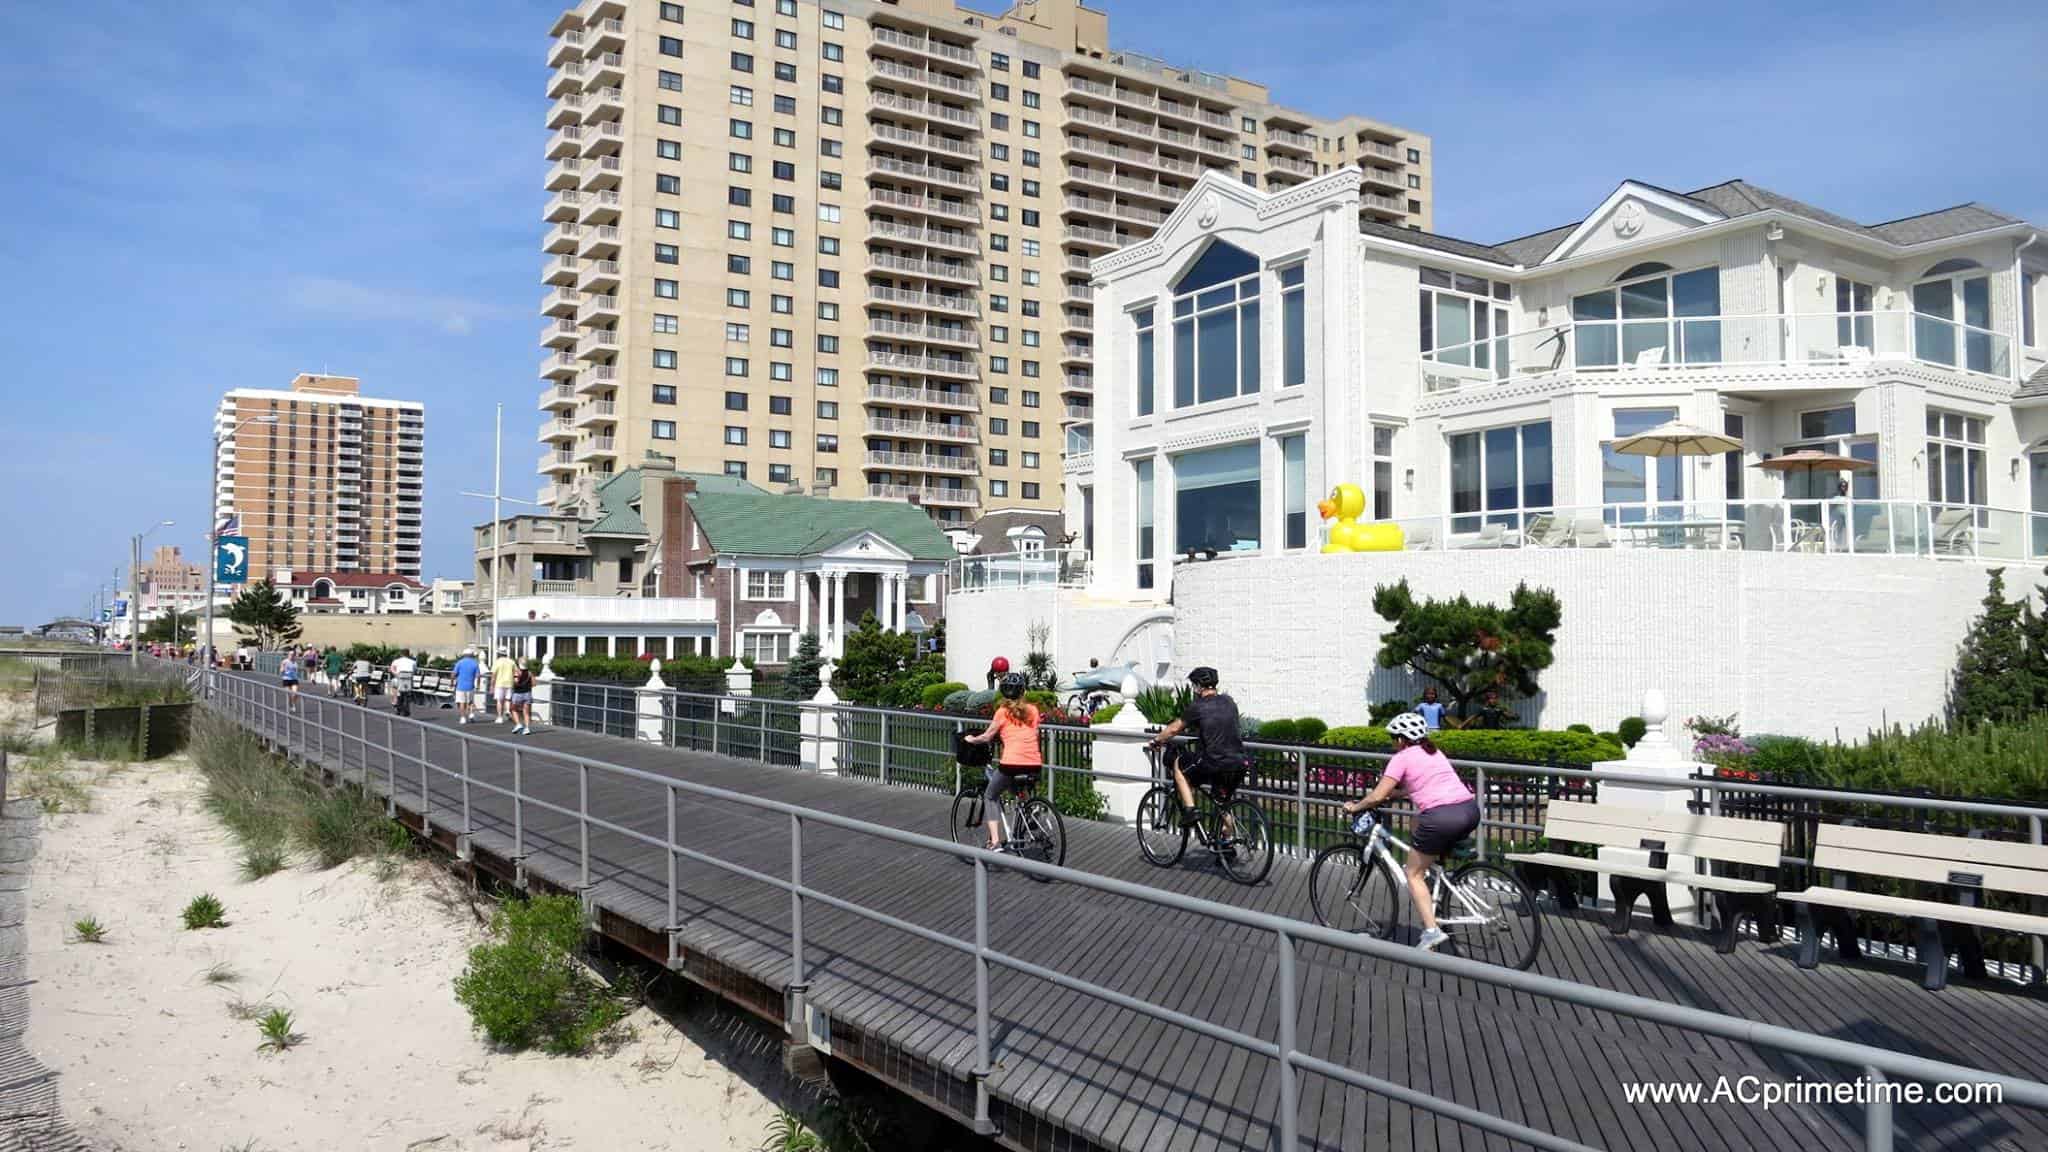 18 New Jersey Towns Awarded Boardwalk Preservation Fund Grants